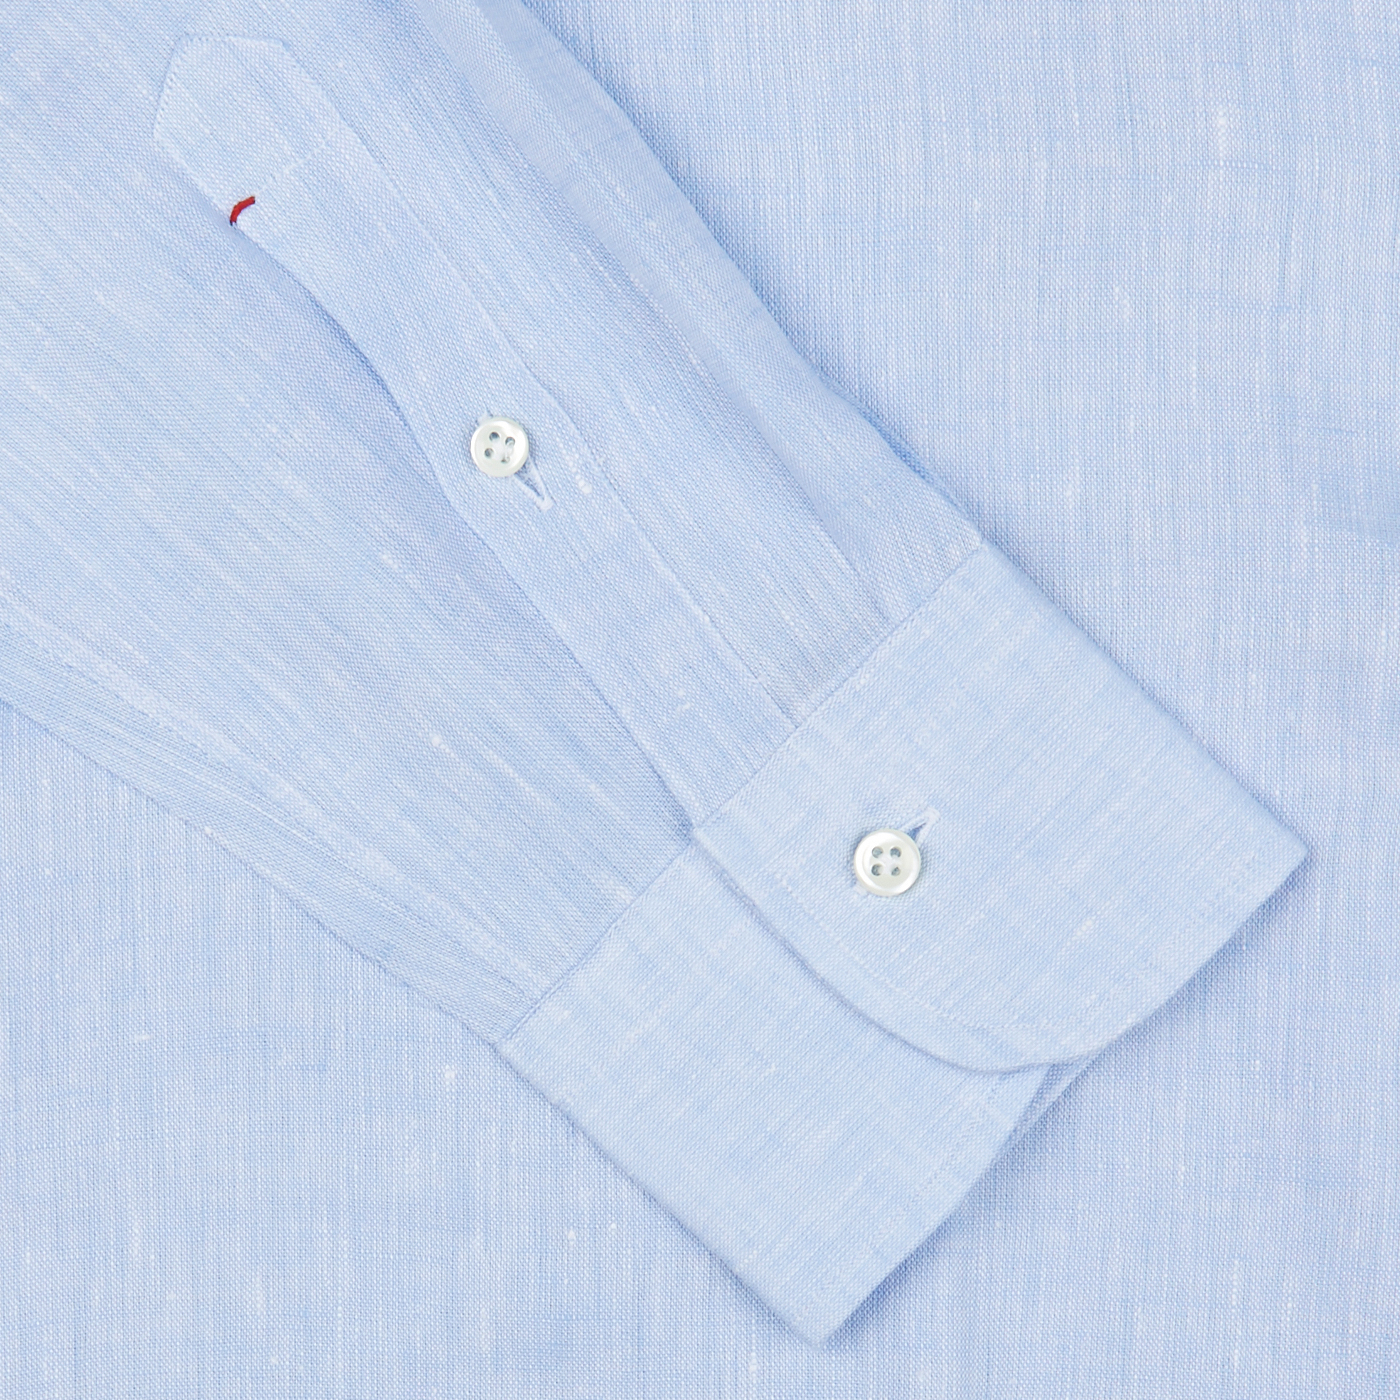 Italian shirtmaker Mazzarelli Sky Blue Organic Linen BD Slim Shirt with a close-up on the cuff and button.